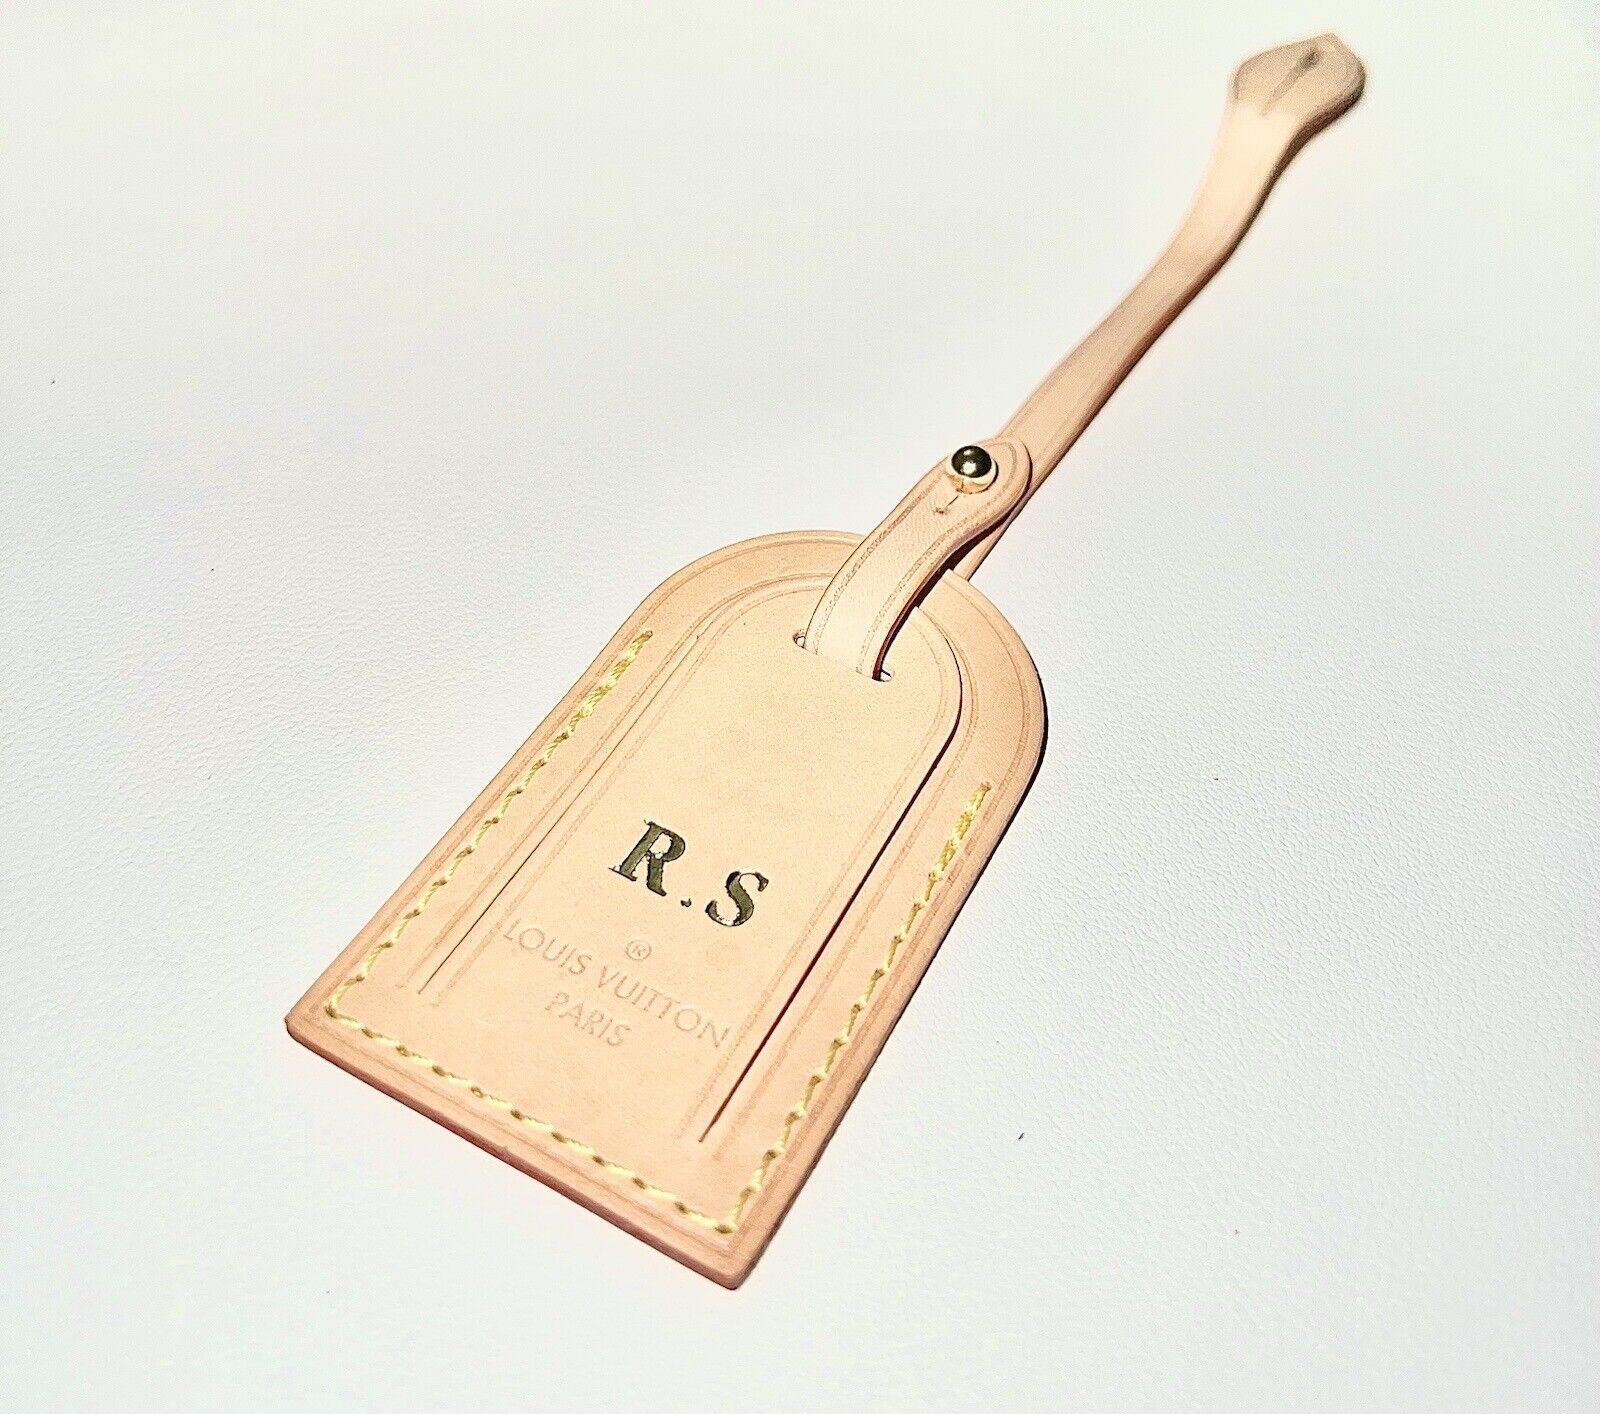 Louis Vuitton Name Tag w/ RS Initials Goldtone - Natural Vachetta Small Mini